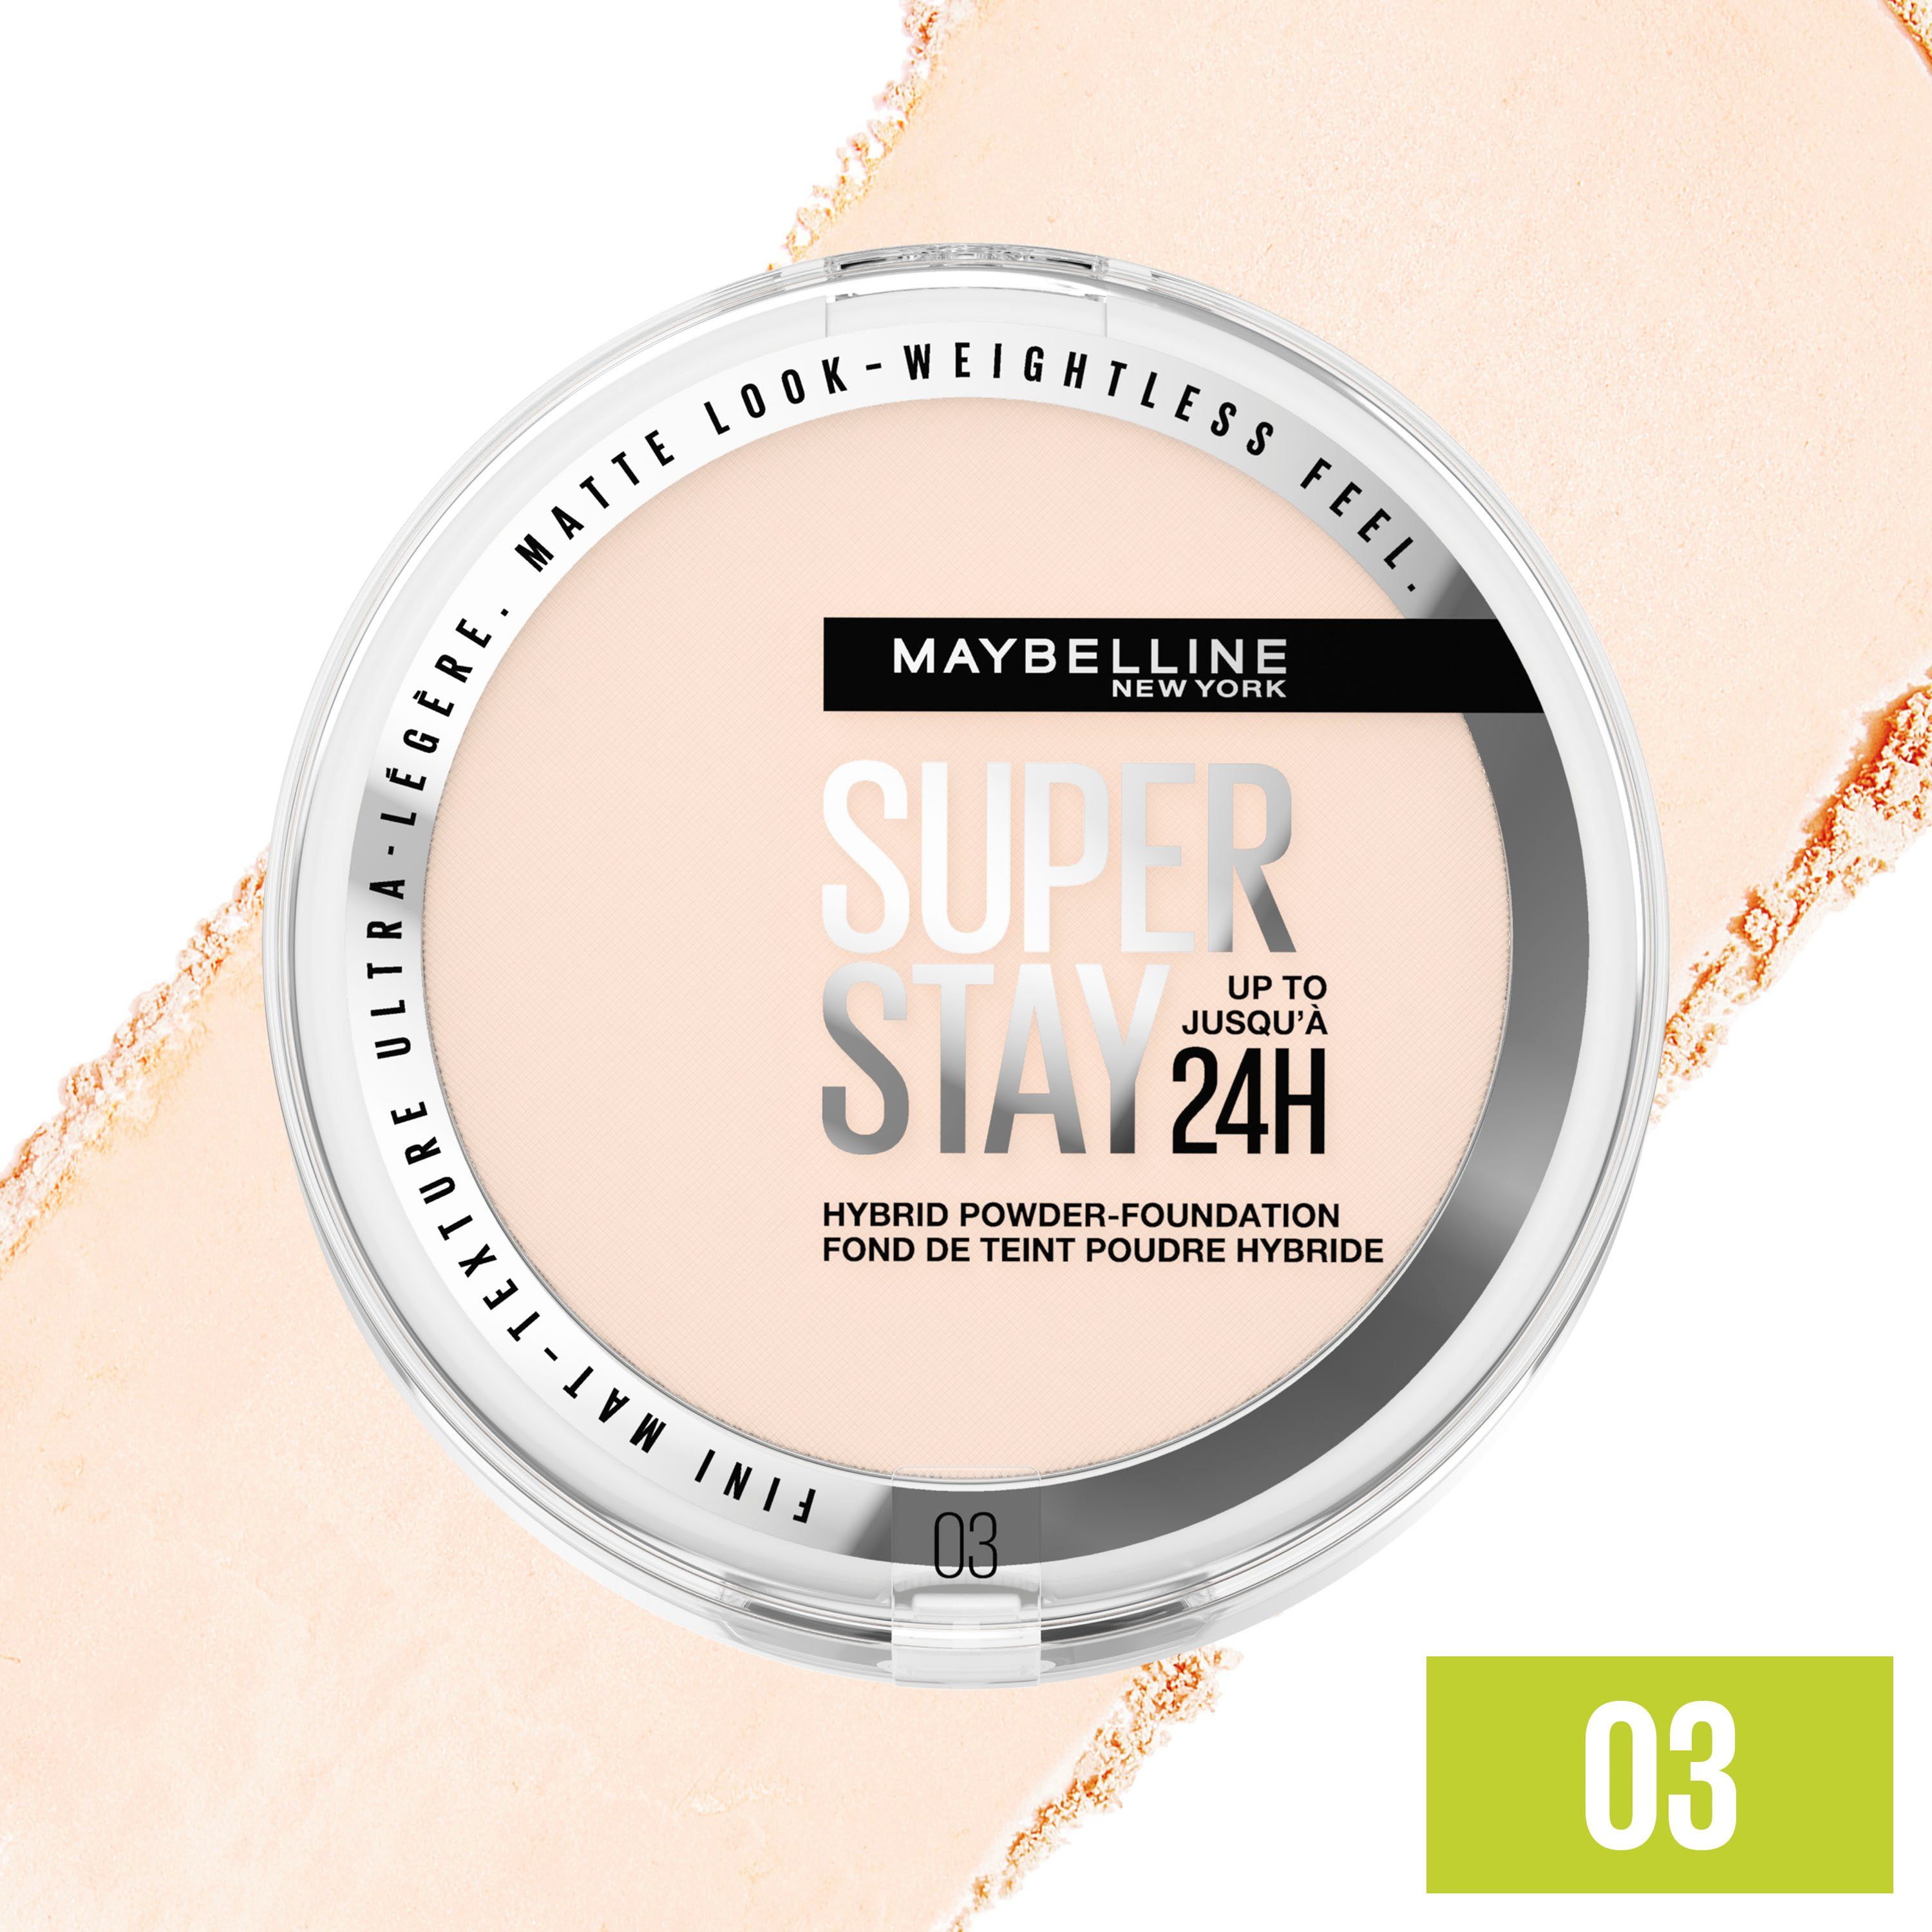 NEW Make-Up Super MAYBELLINE Maybelline Hybrides YORK Foundation Puder Stay New York